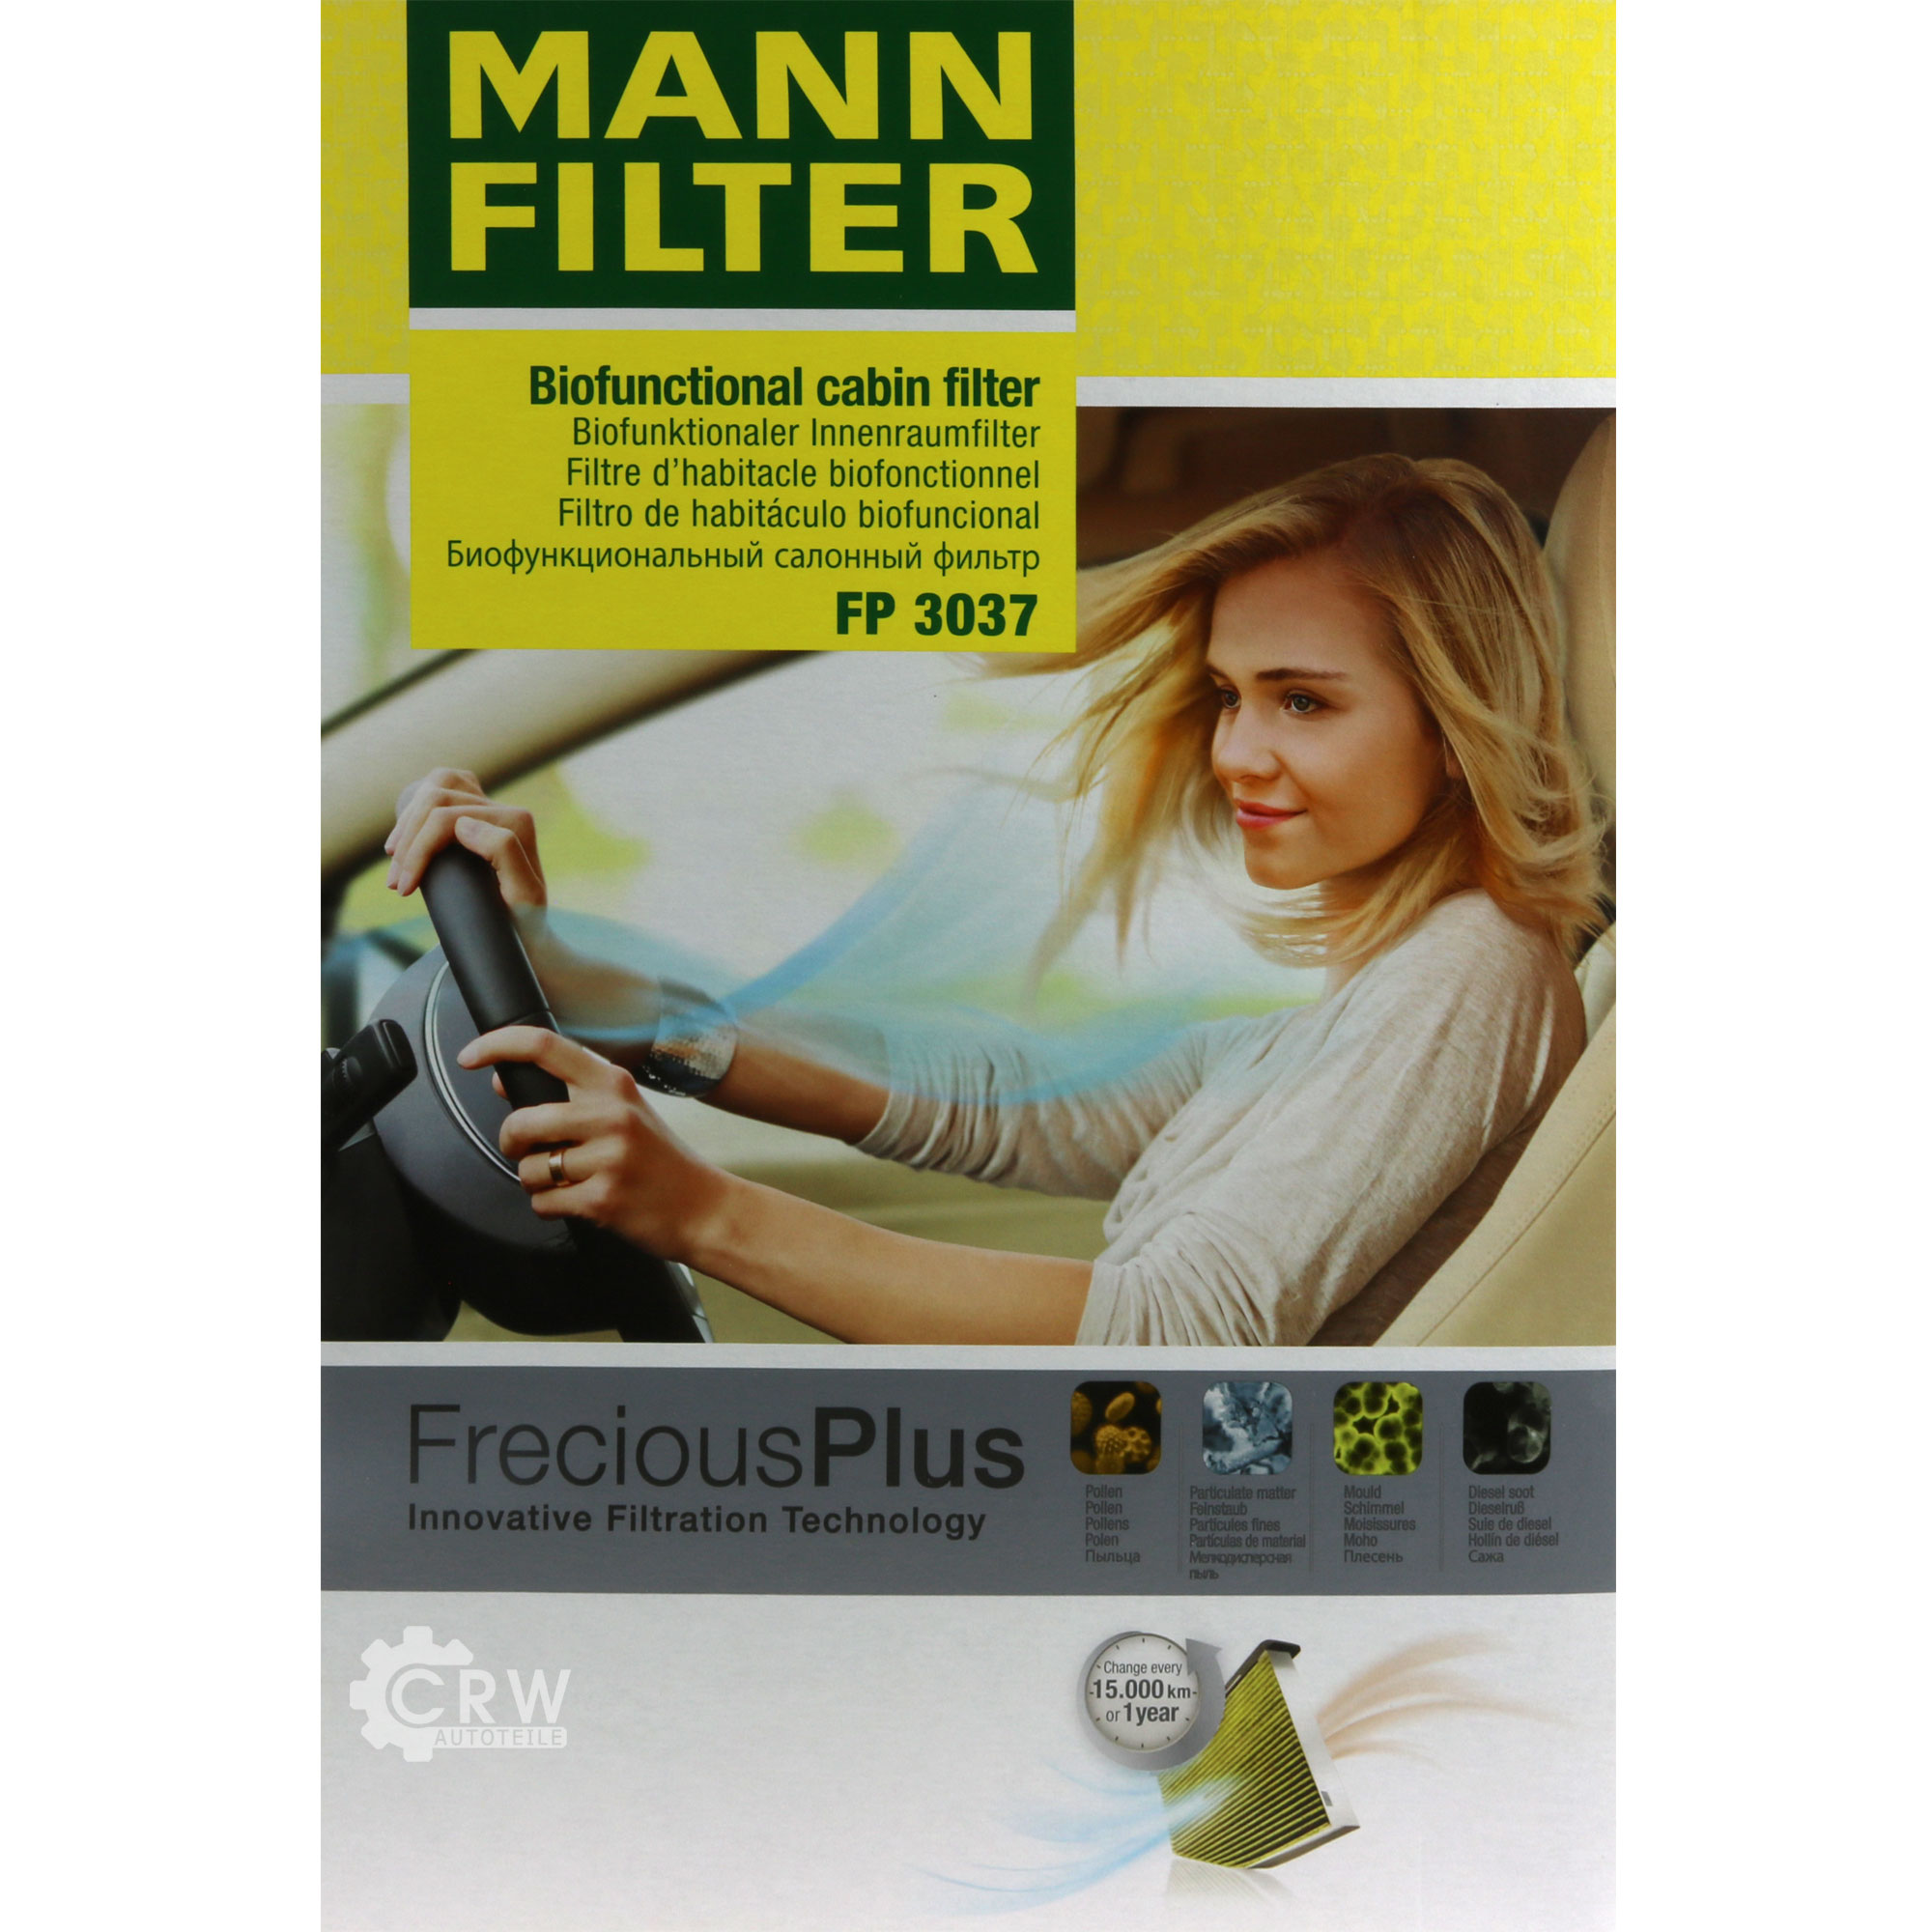 MANN-Filter Innenraumfilter Biofunctional für Allergiker FP 3037